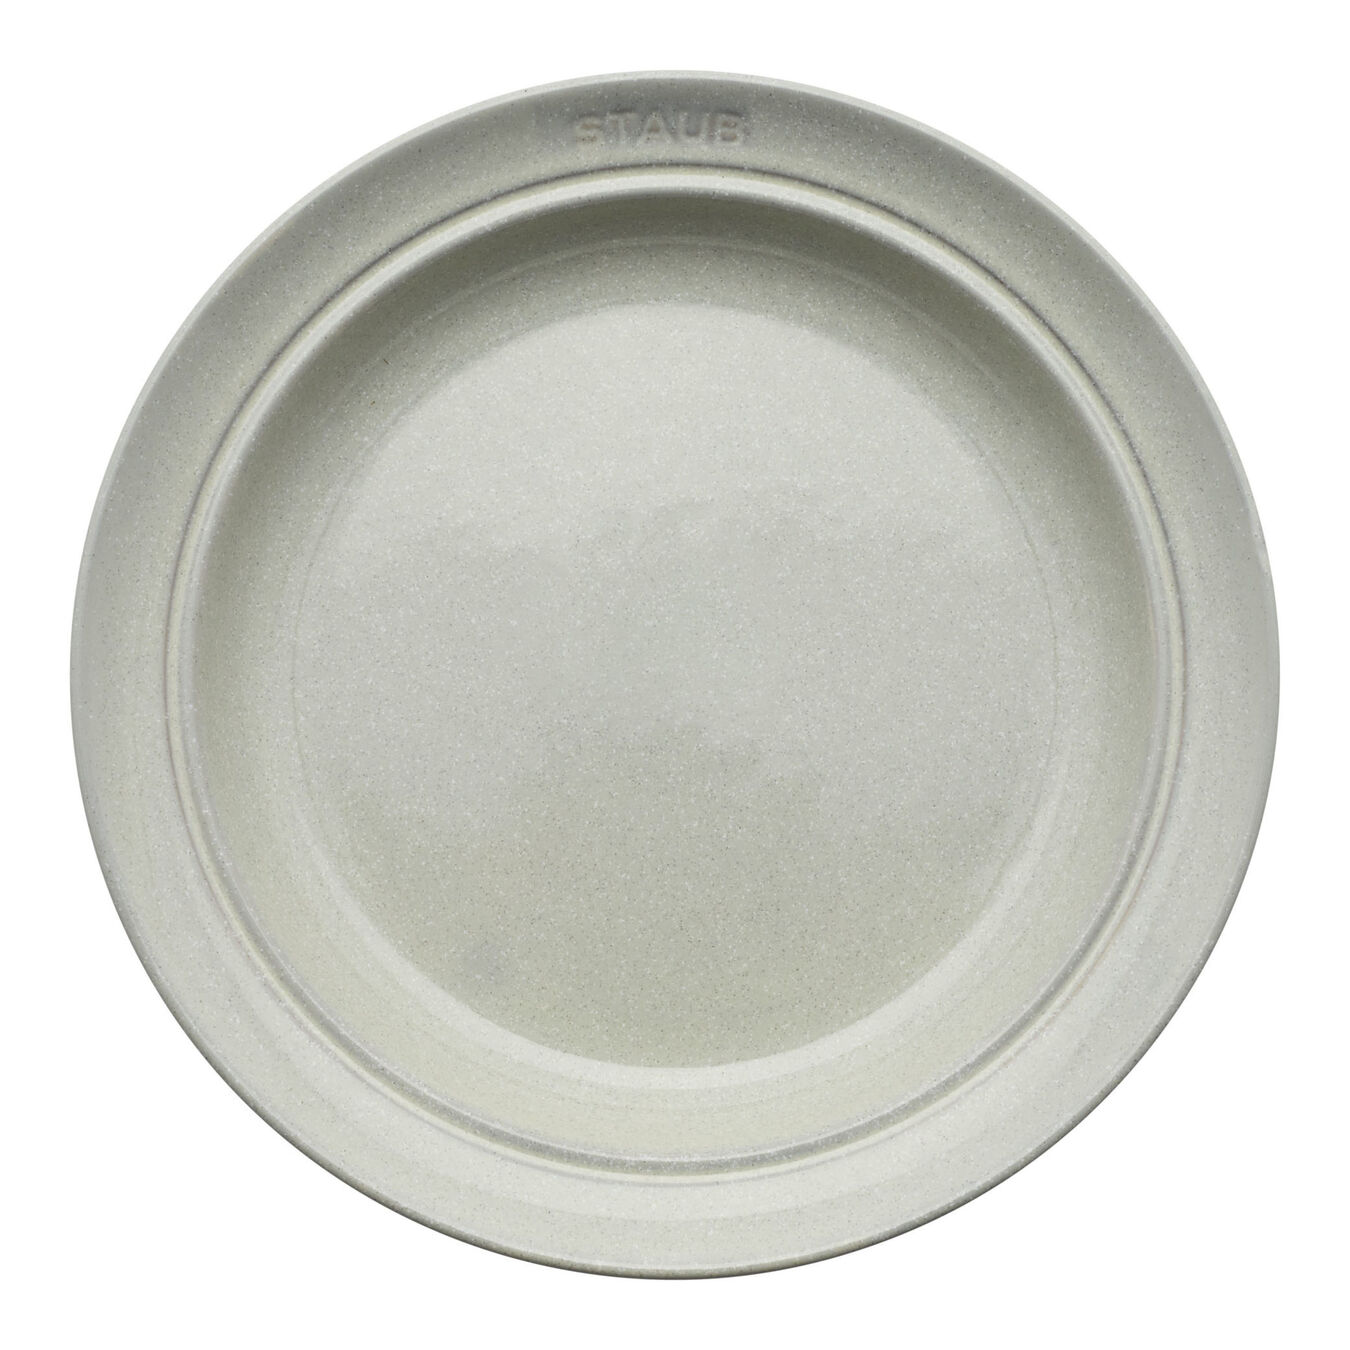 Soup/Pasta Bowl Set, 4 Piece | white truffle | ceramic,,large 1